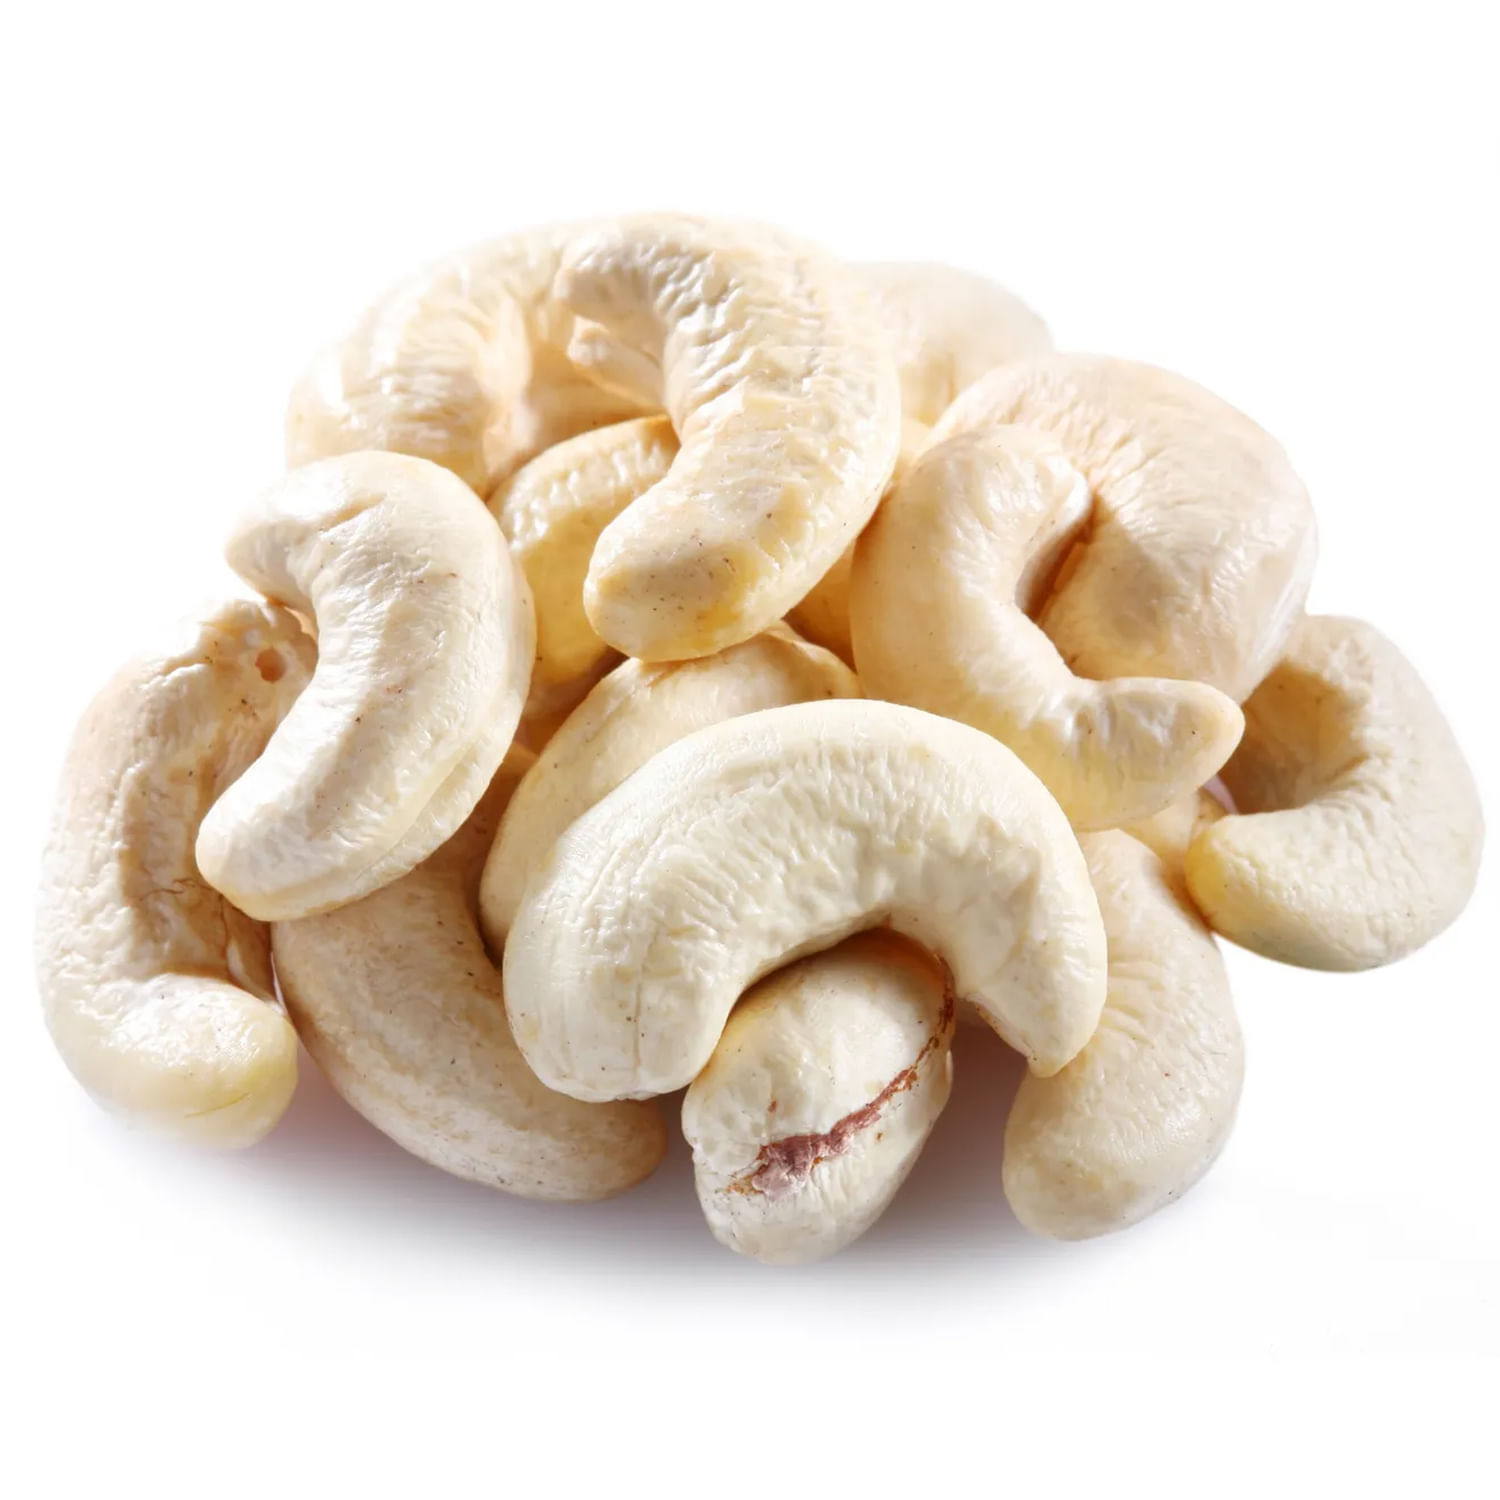 Nutraj Special Cashew Nuts 500g